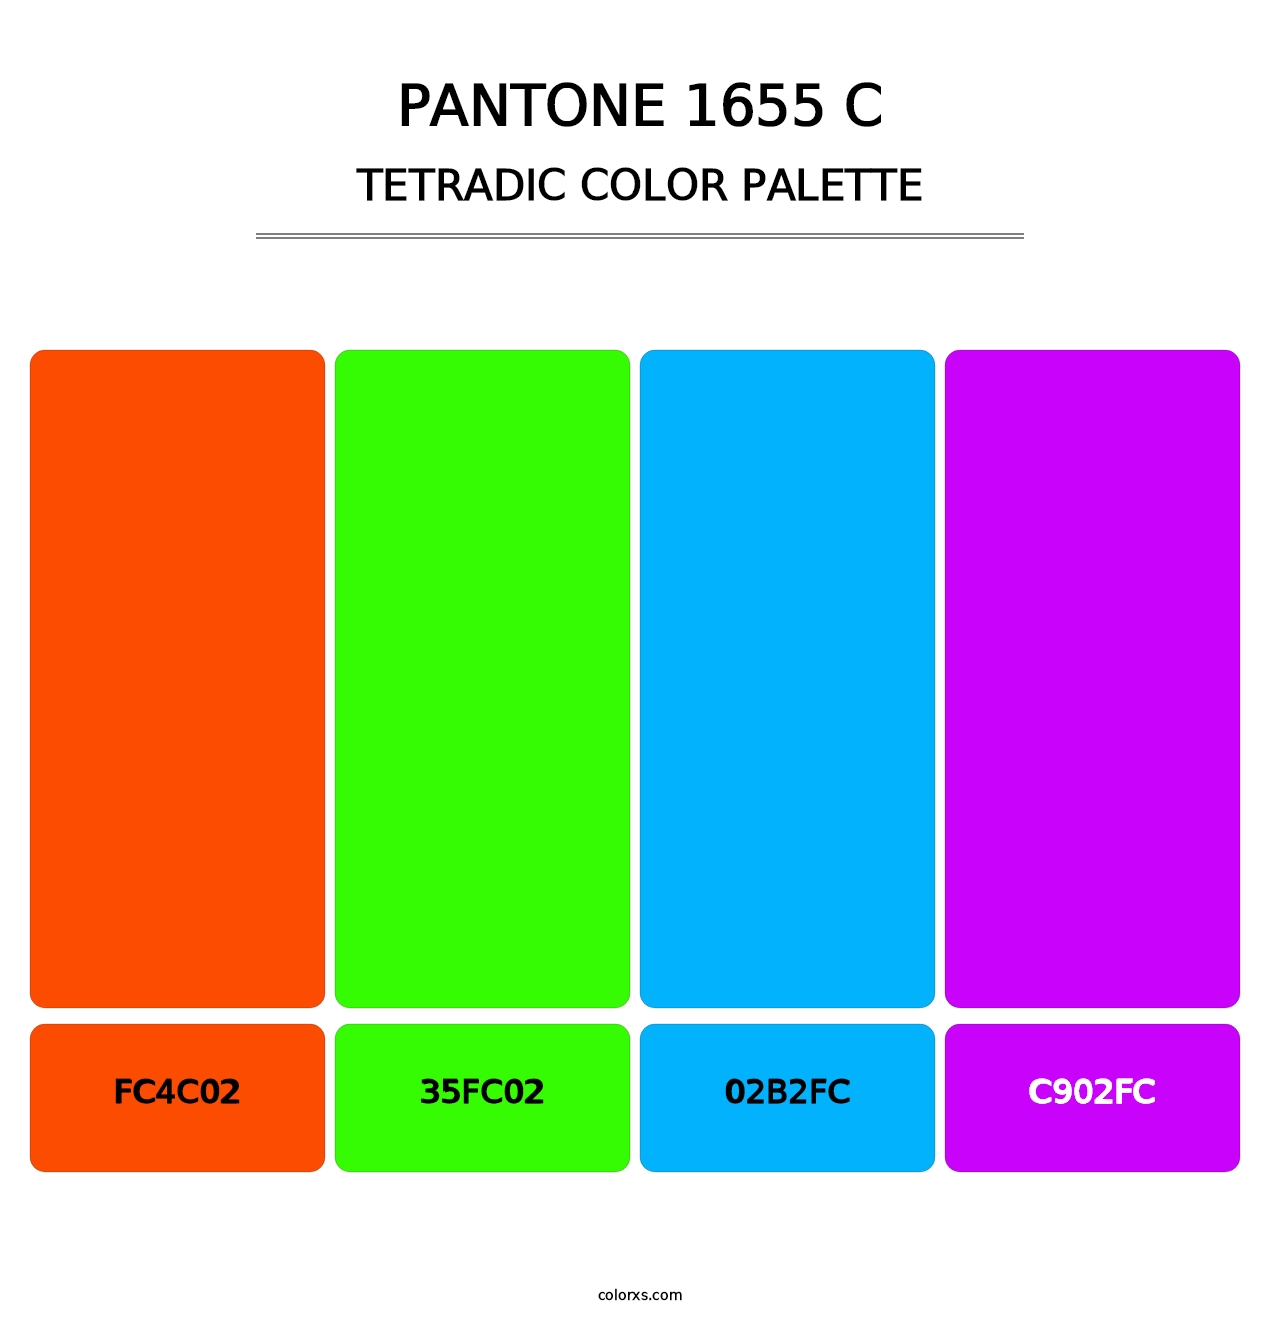 PANTONE 1655 C - Tetradic Color Palette